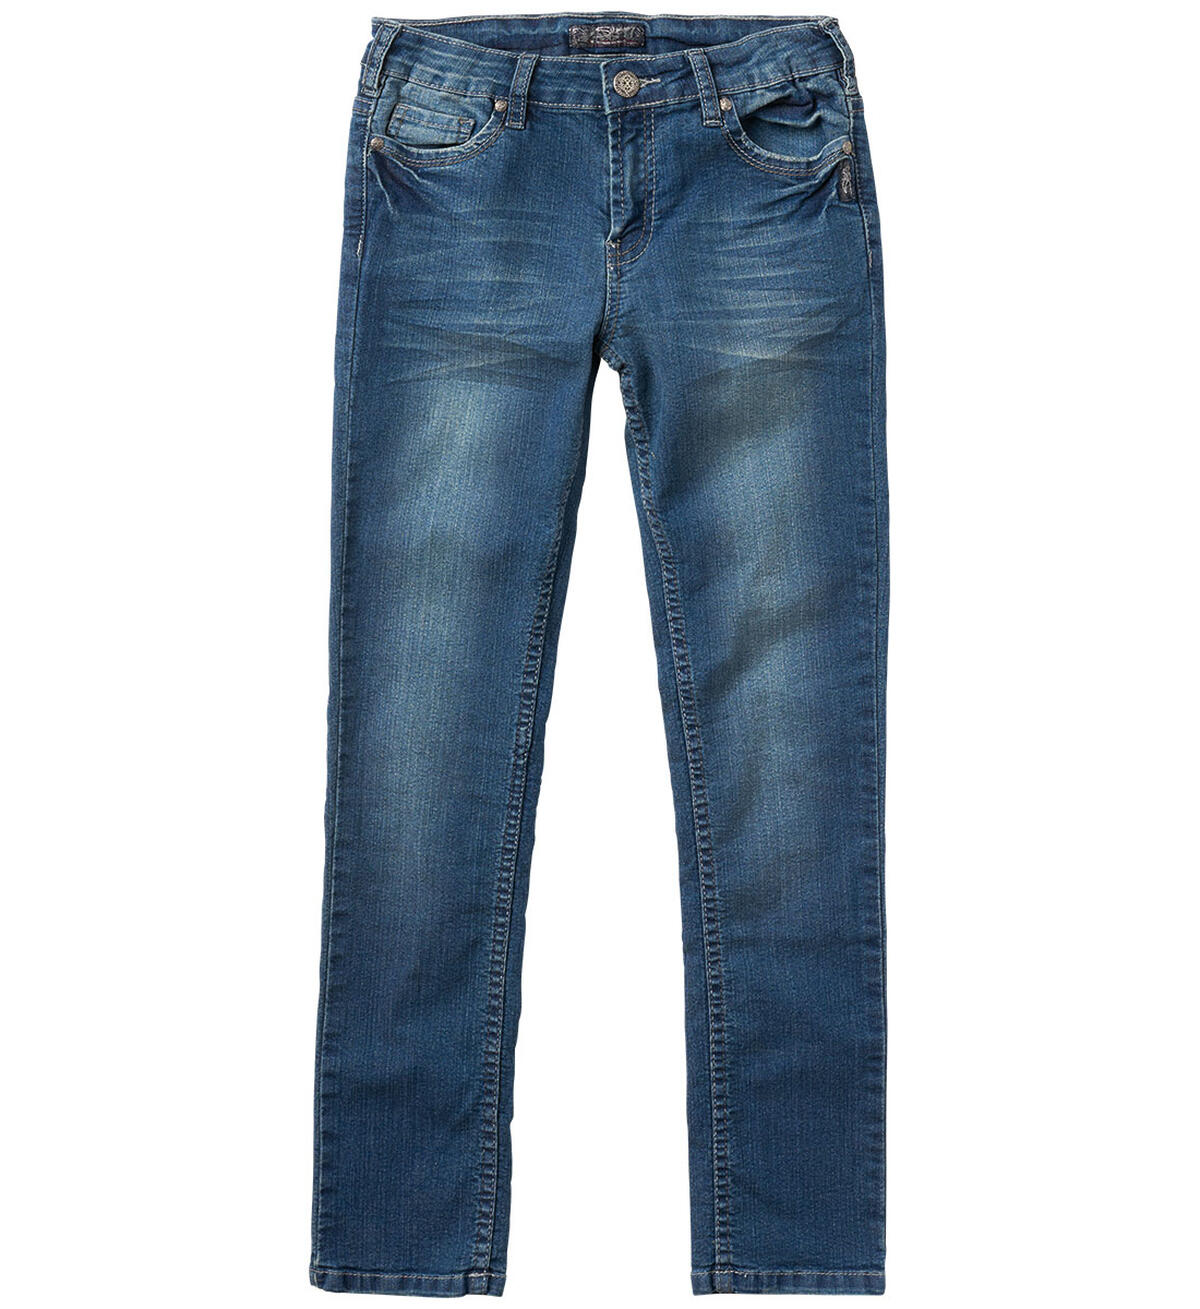 Sasha Skinny Jeans in Dark Wash (7-16), , hi-res image number 0